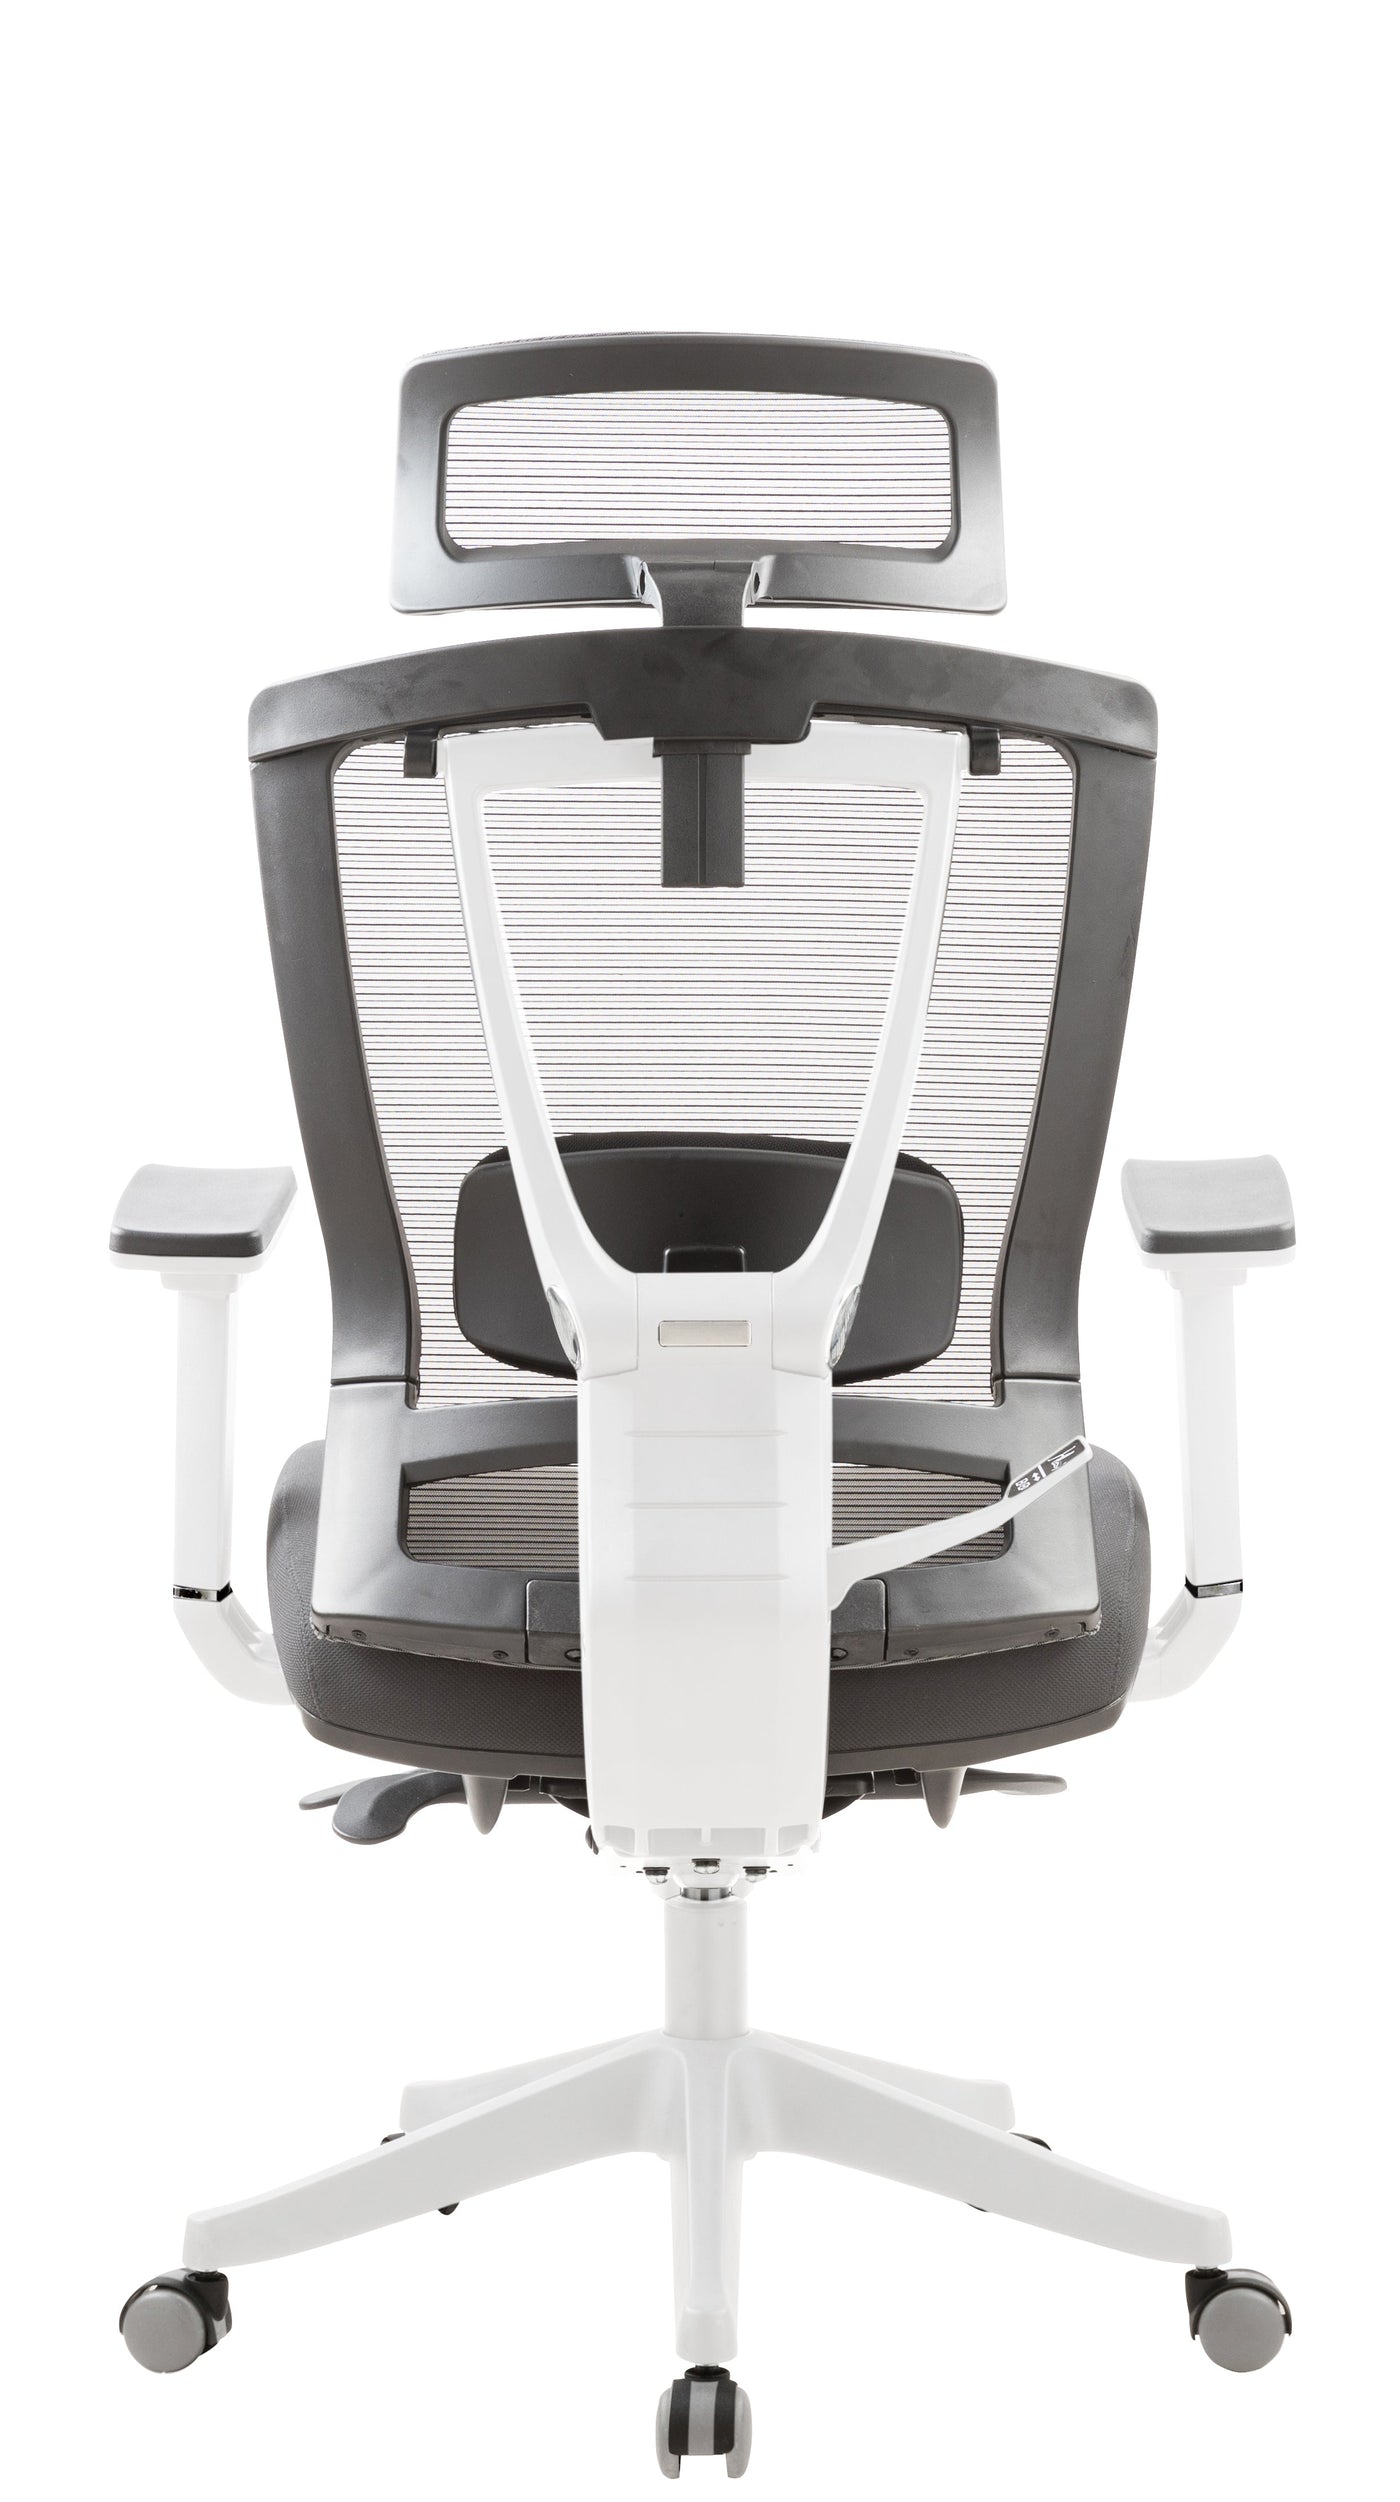 AeryChair  Best Fully-Adjustable Ergonomic Chair